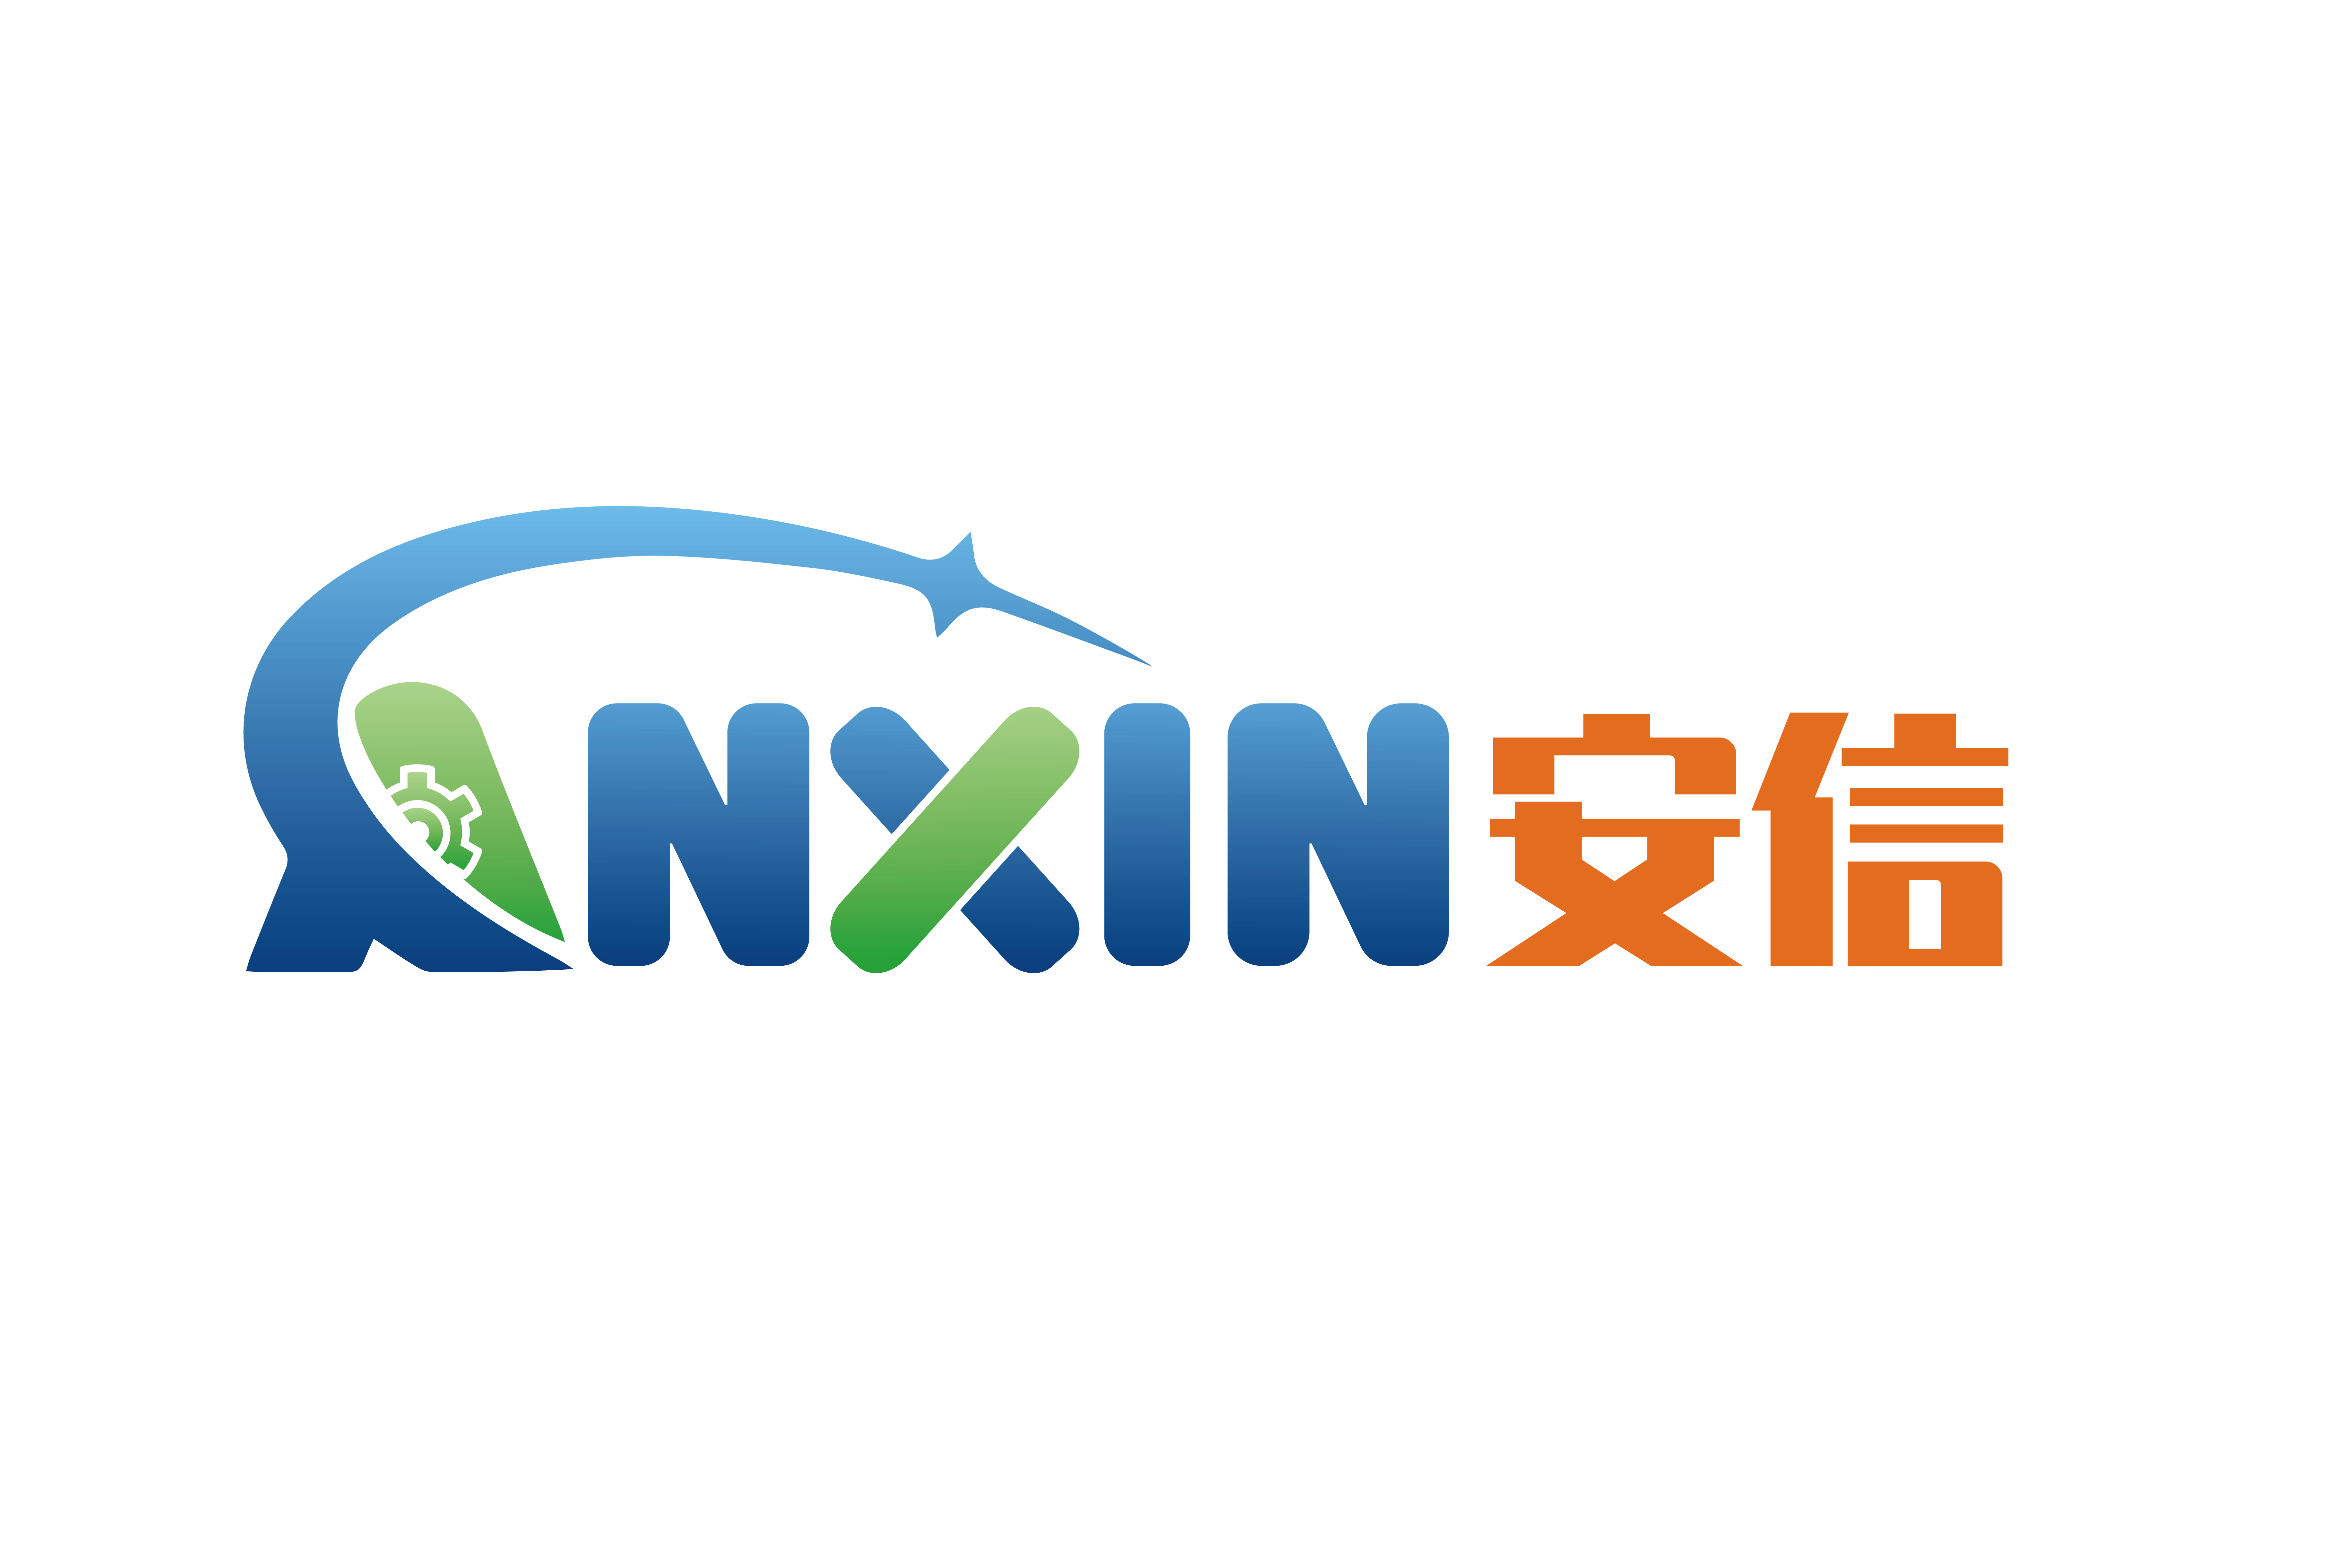 Anxin logo